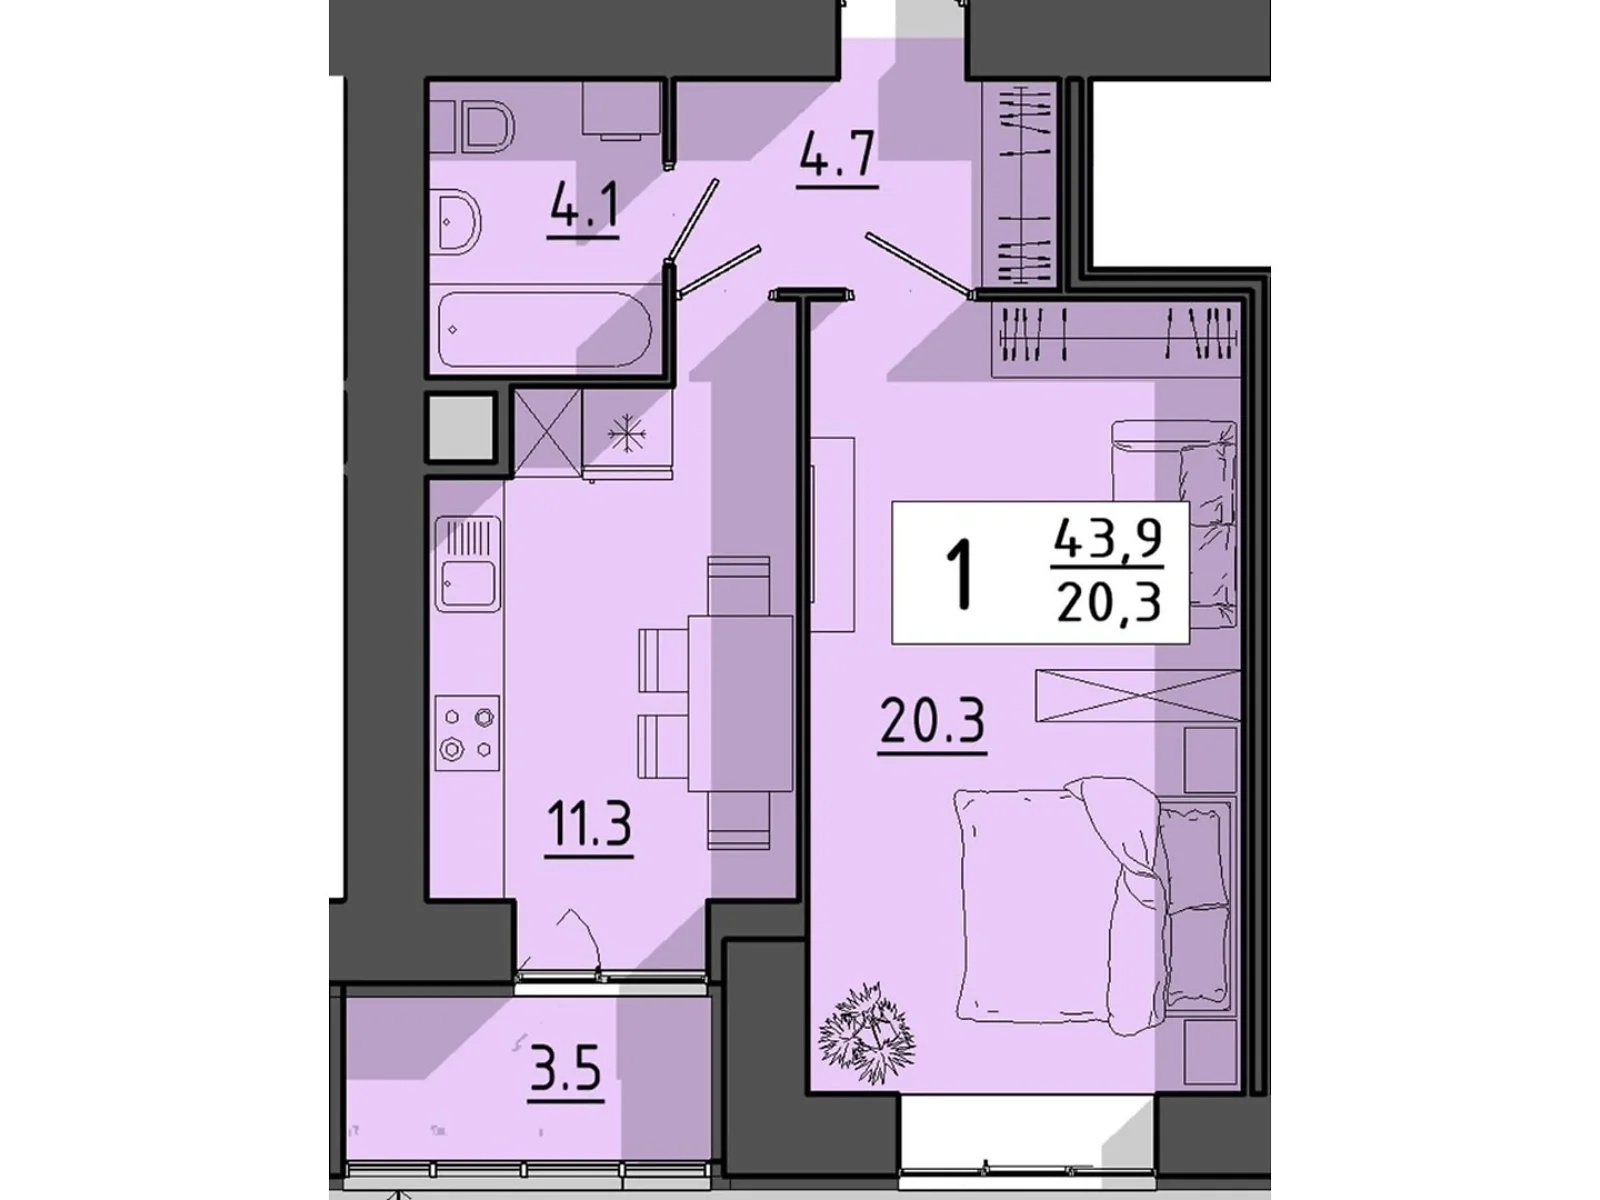 1-кімнатна квартира 43.9 кв. м у Тернополі, цена: 30054 $ - фото 1